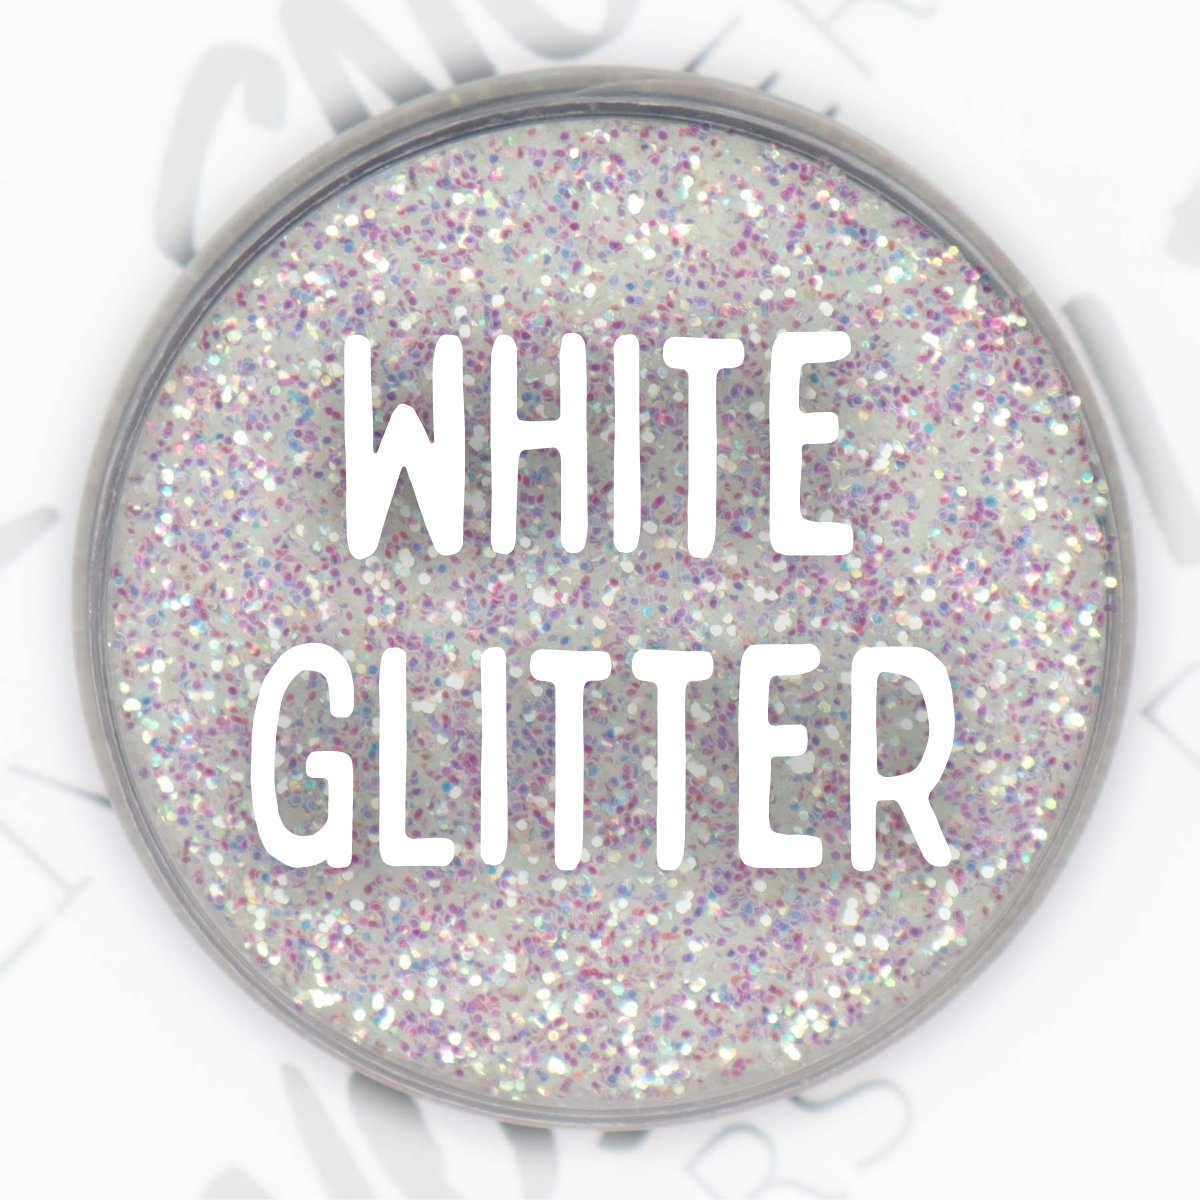 White Glitters – Peachy Olive Glitters